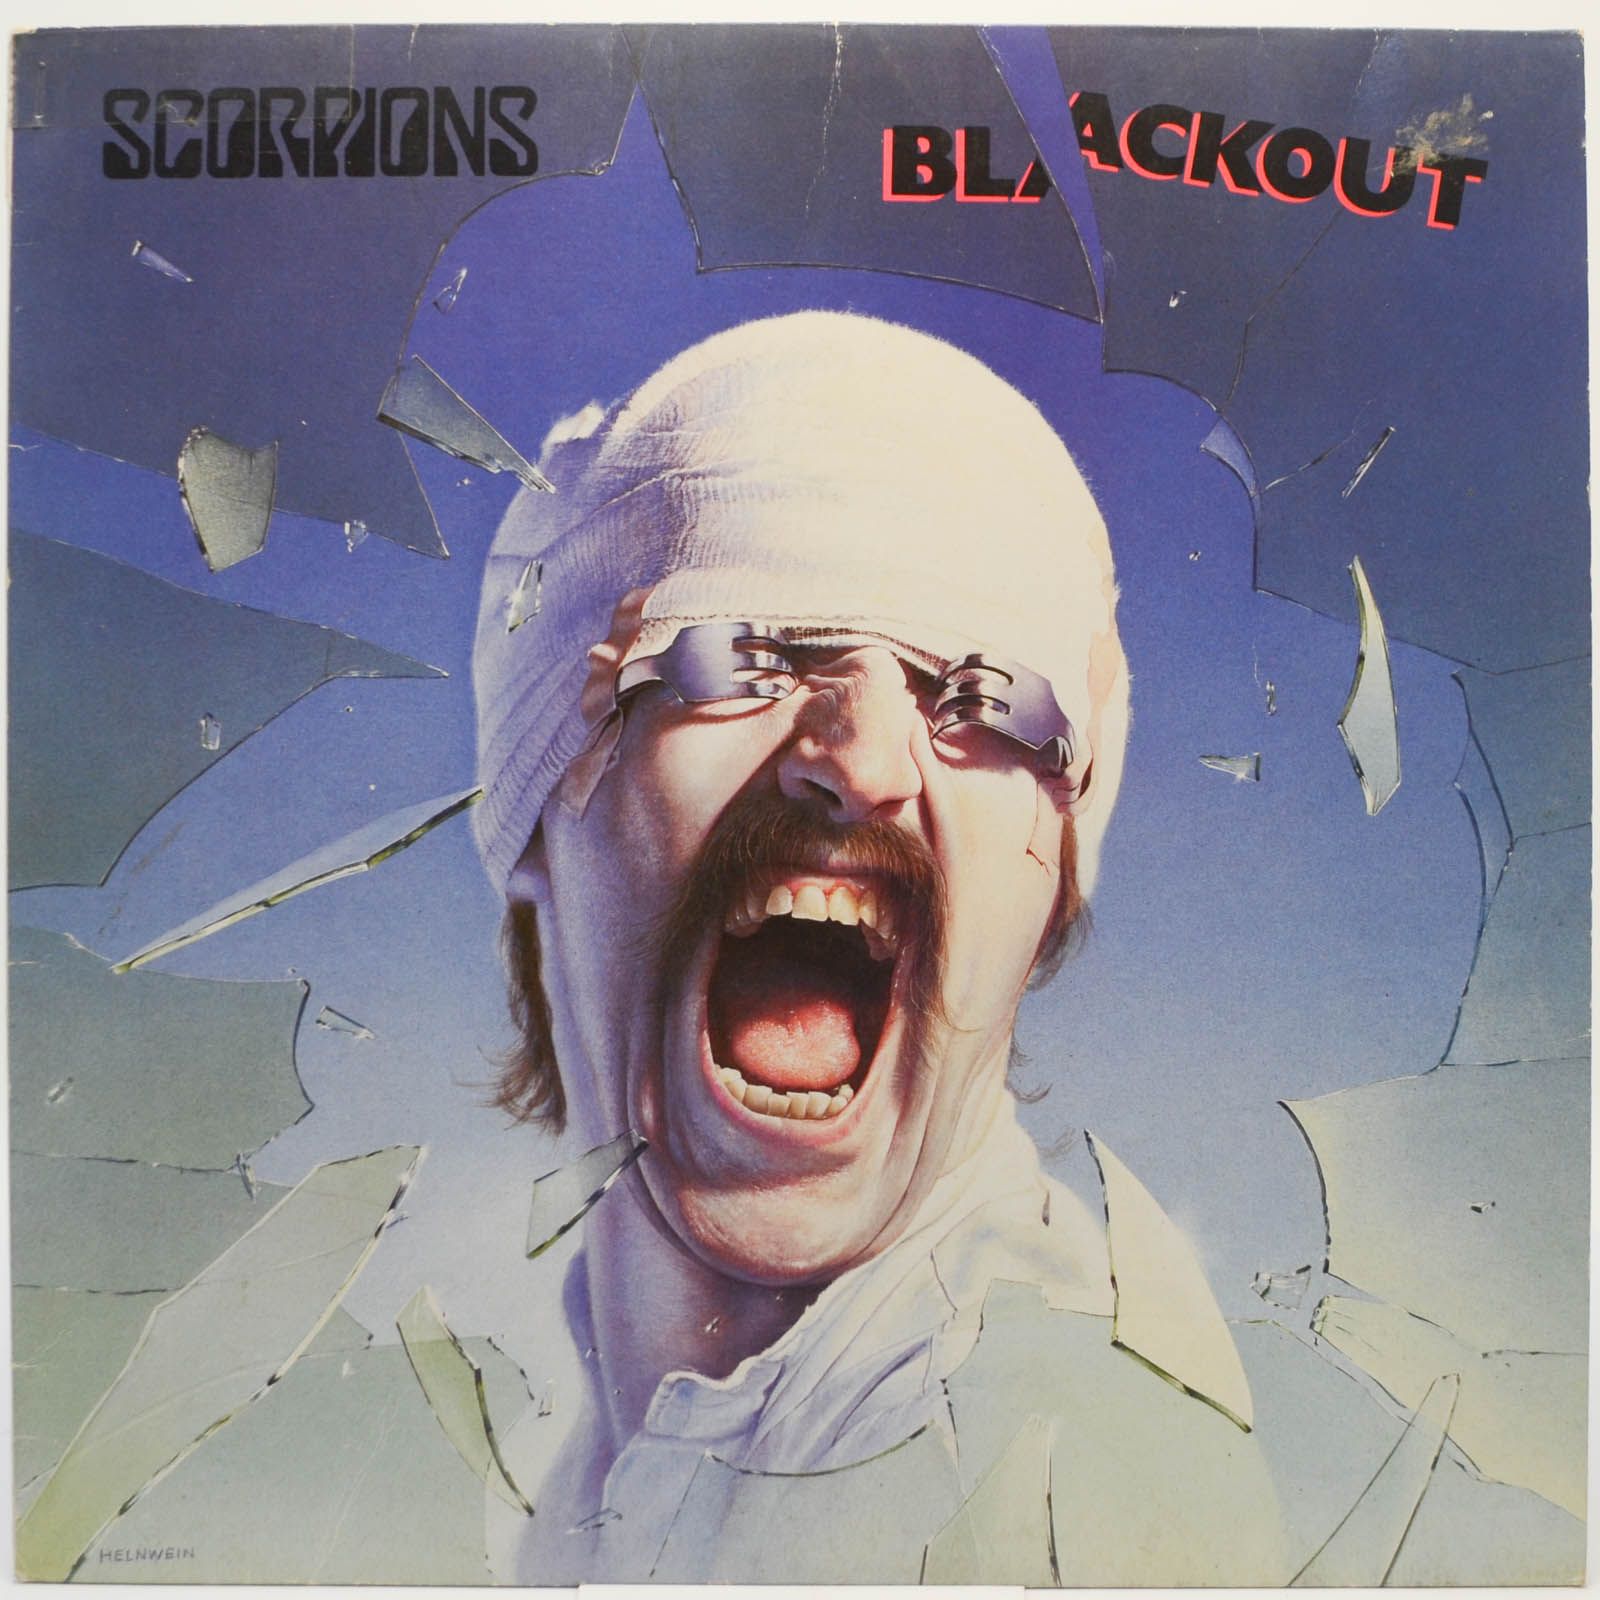 Scorpions — Blackout (1-st, Germany), 1982